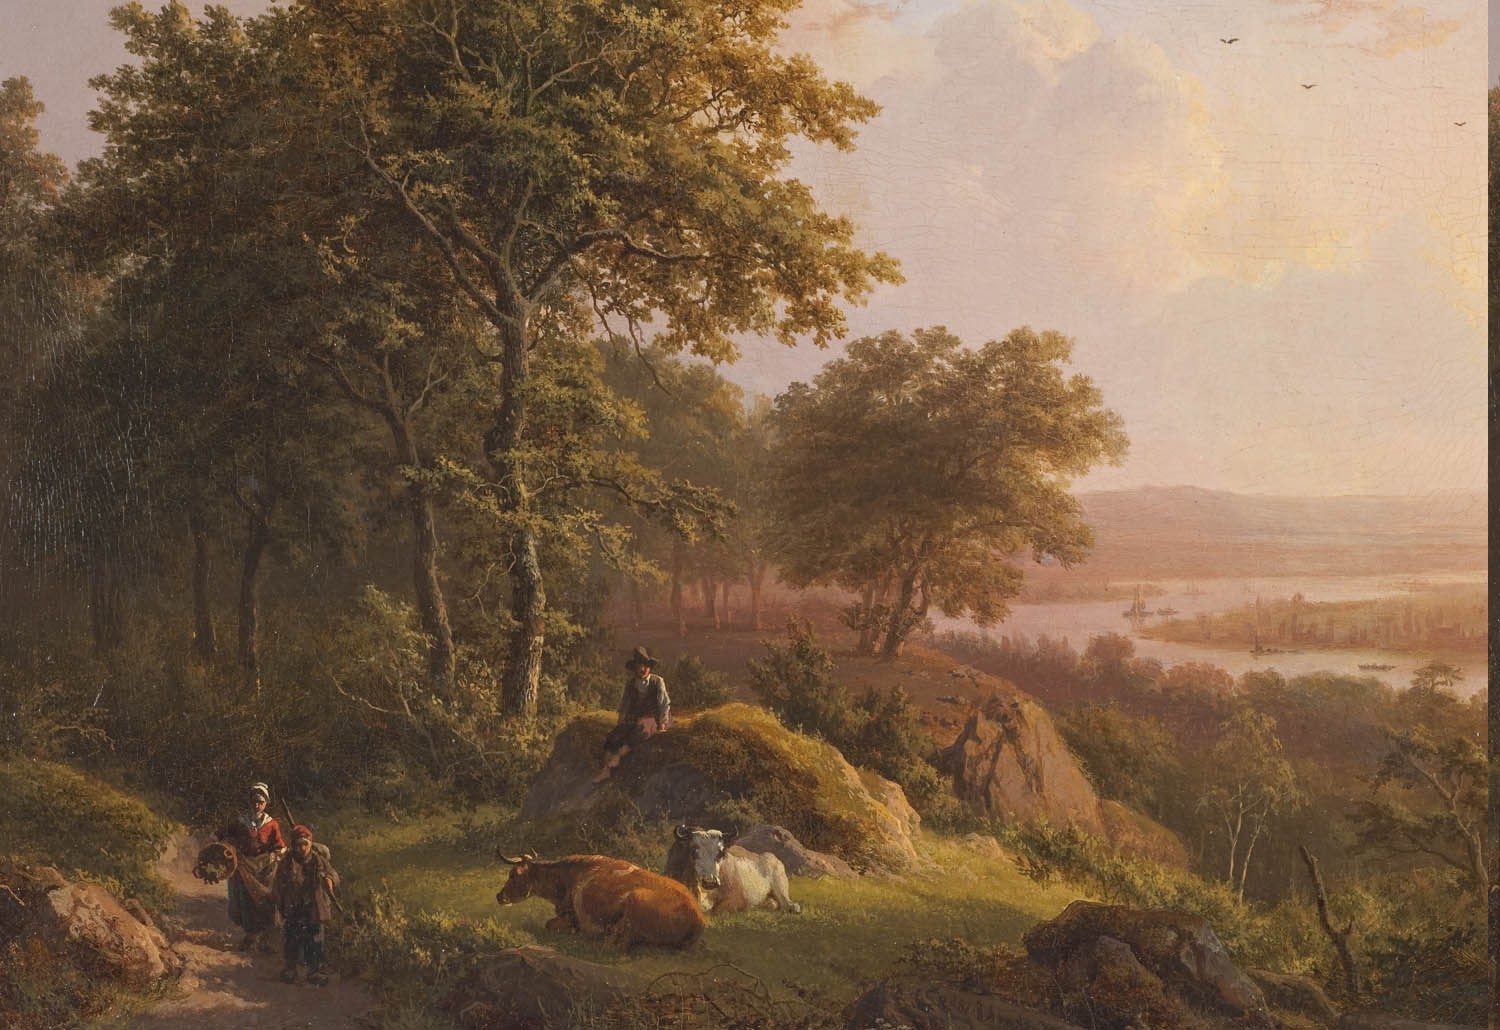 painting, Peasants, Landscape, Classic Art, Cows, Rock, Trees, River